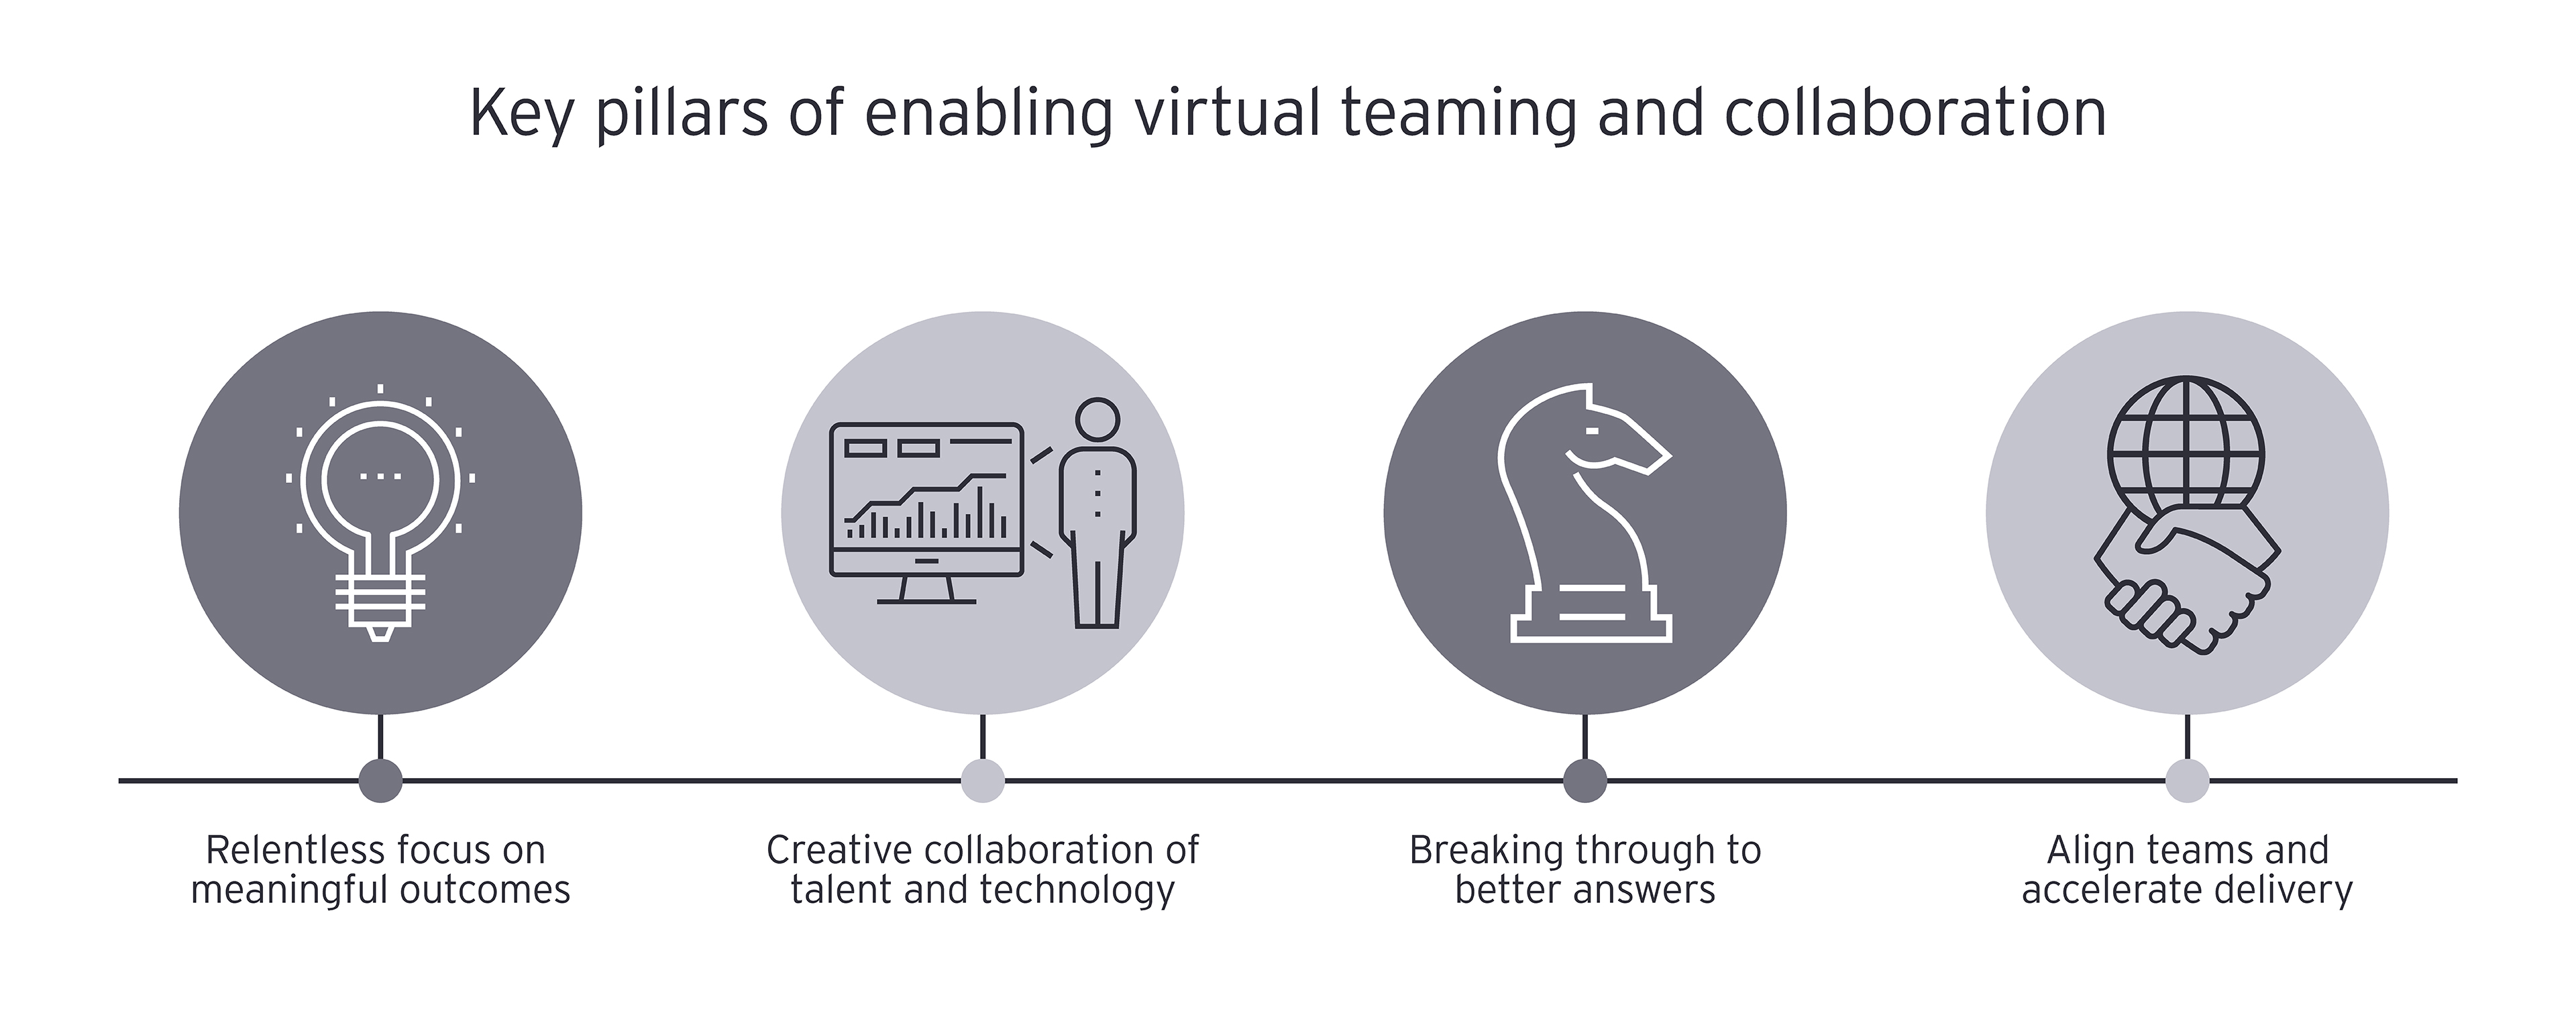 Figure 1: Key pillars of enabling virtual teaming and collaboration